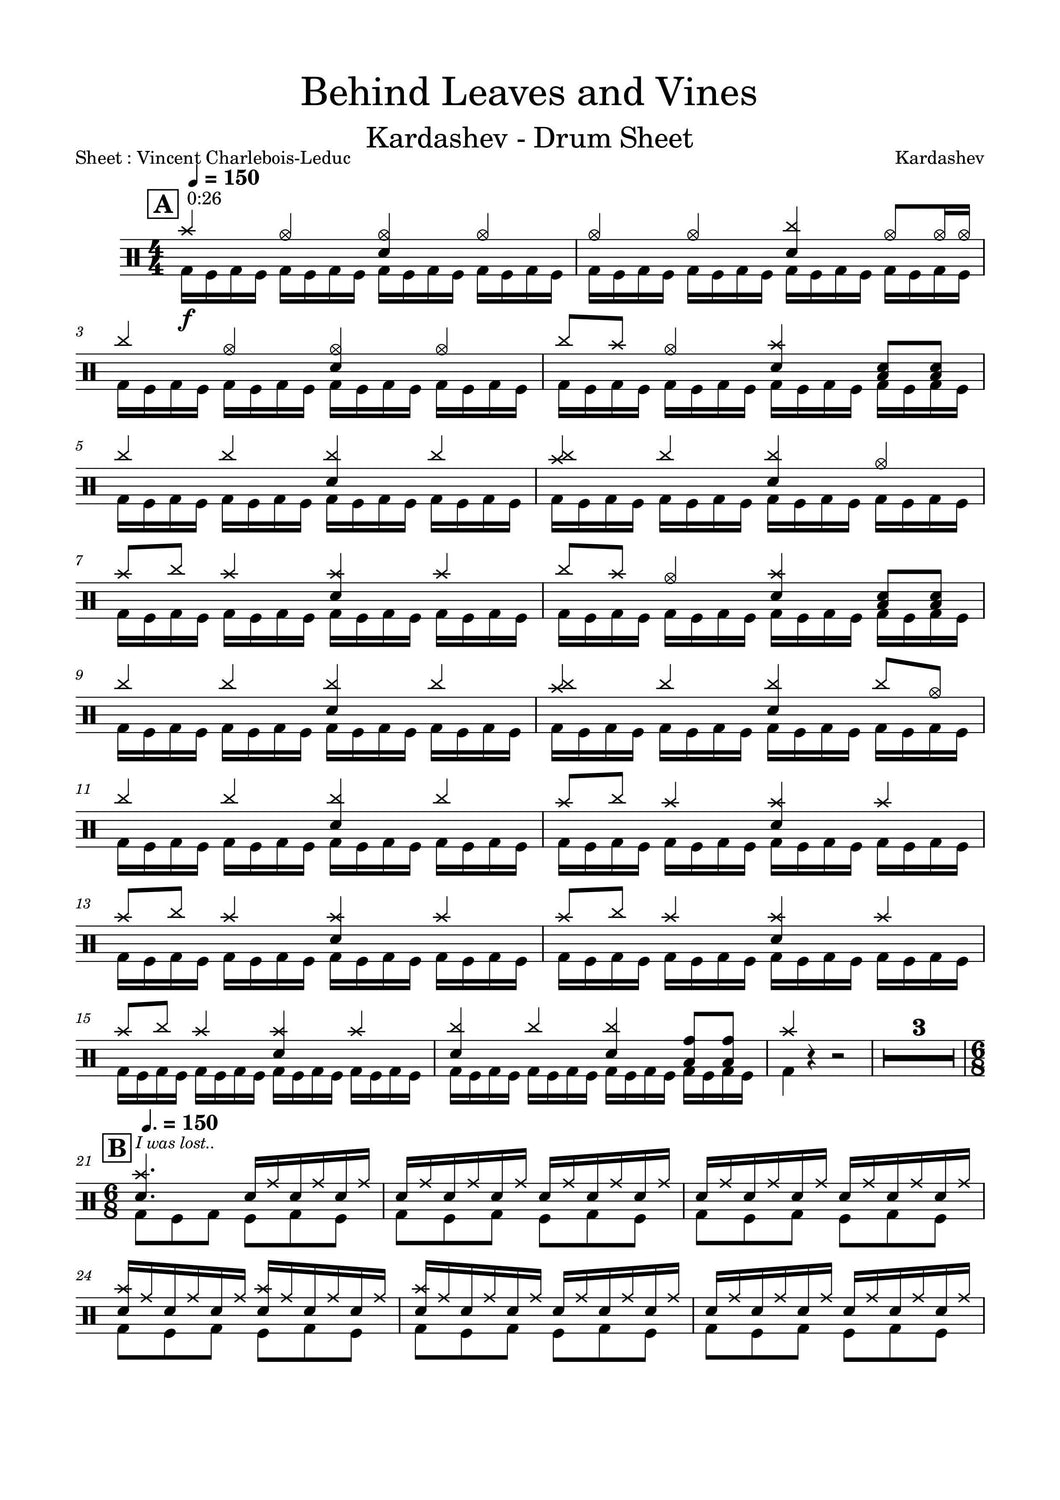 Behind Leaves and Vines - Kardashev - Full Drum Transcription / Drum Sheet Music - Vince’s Scores